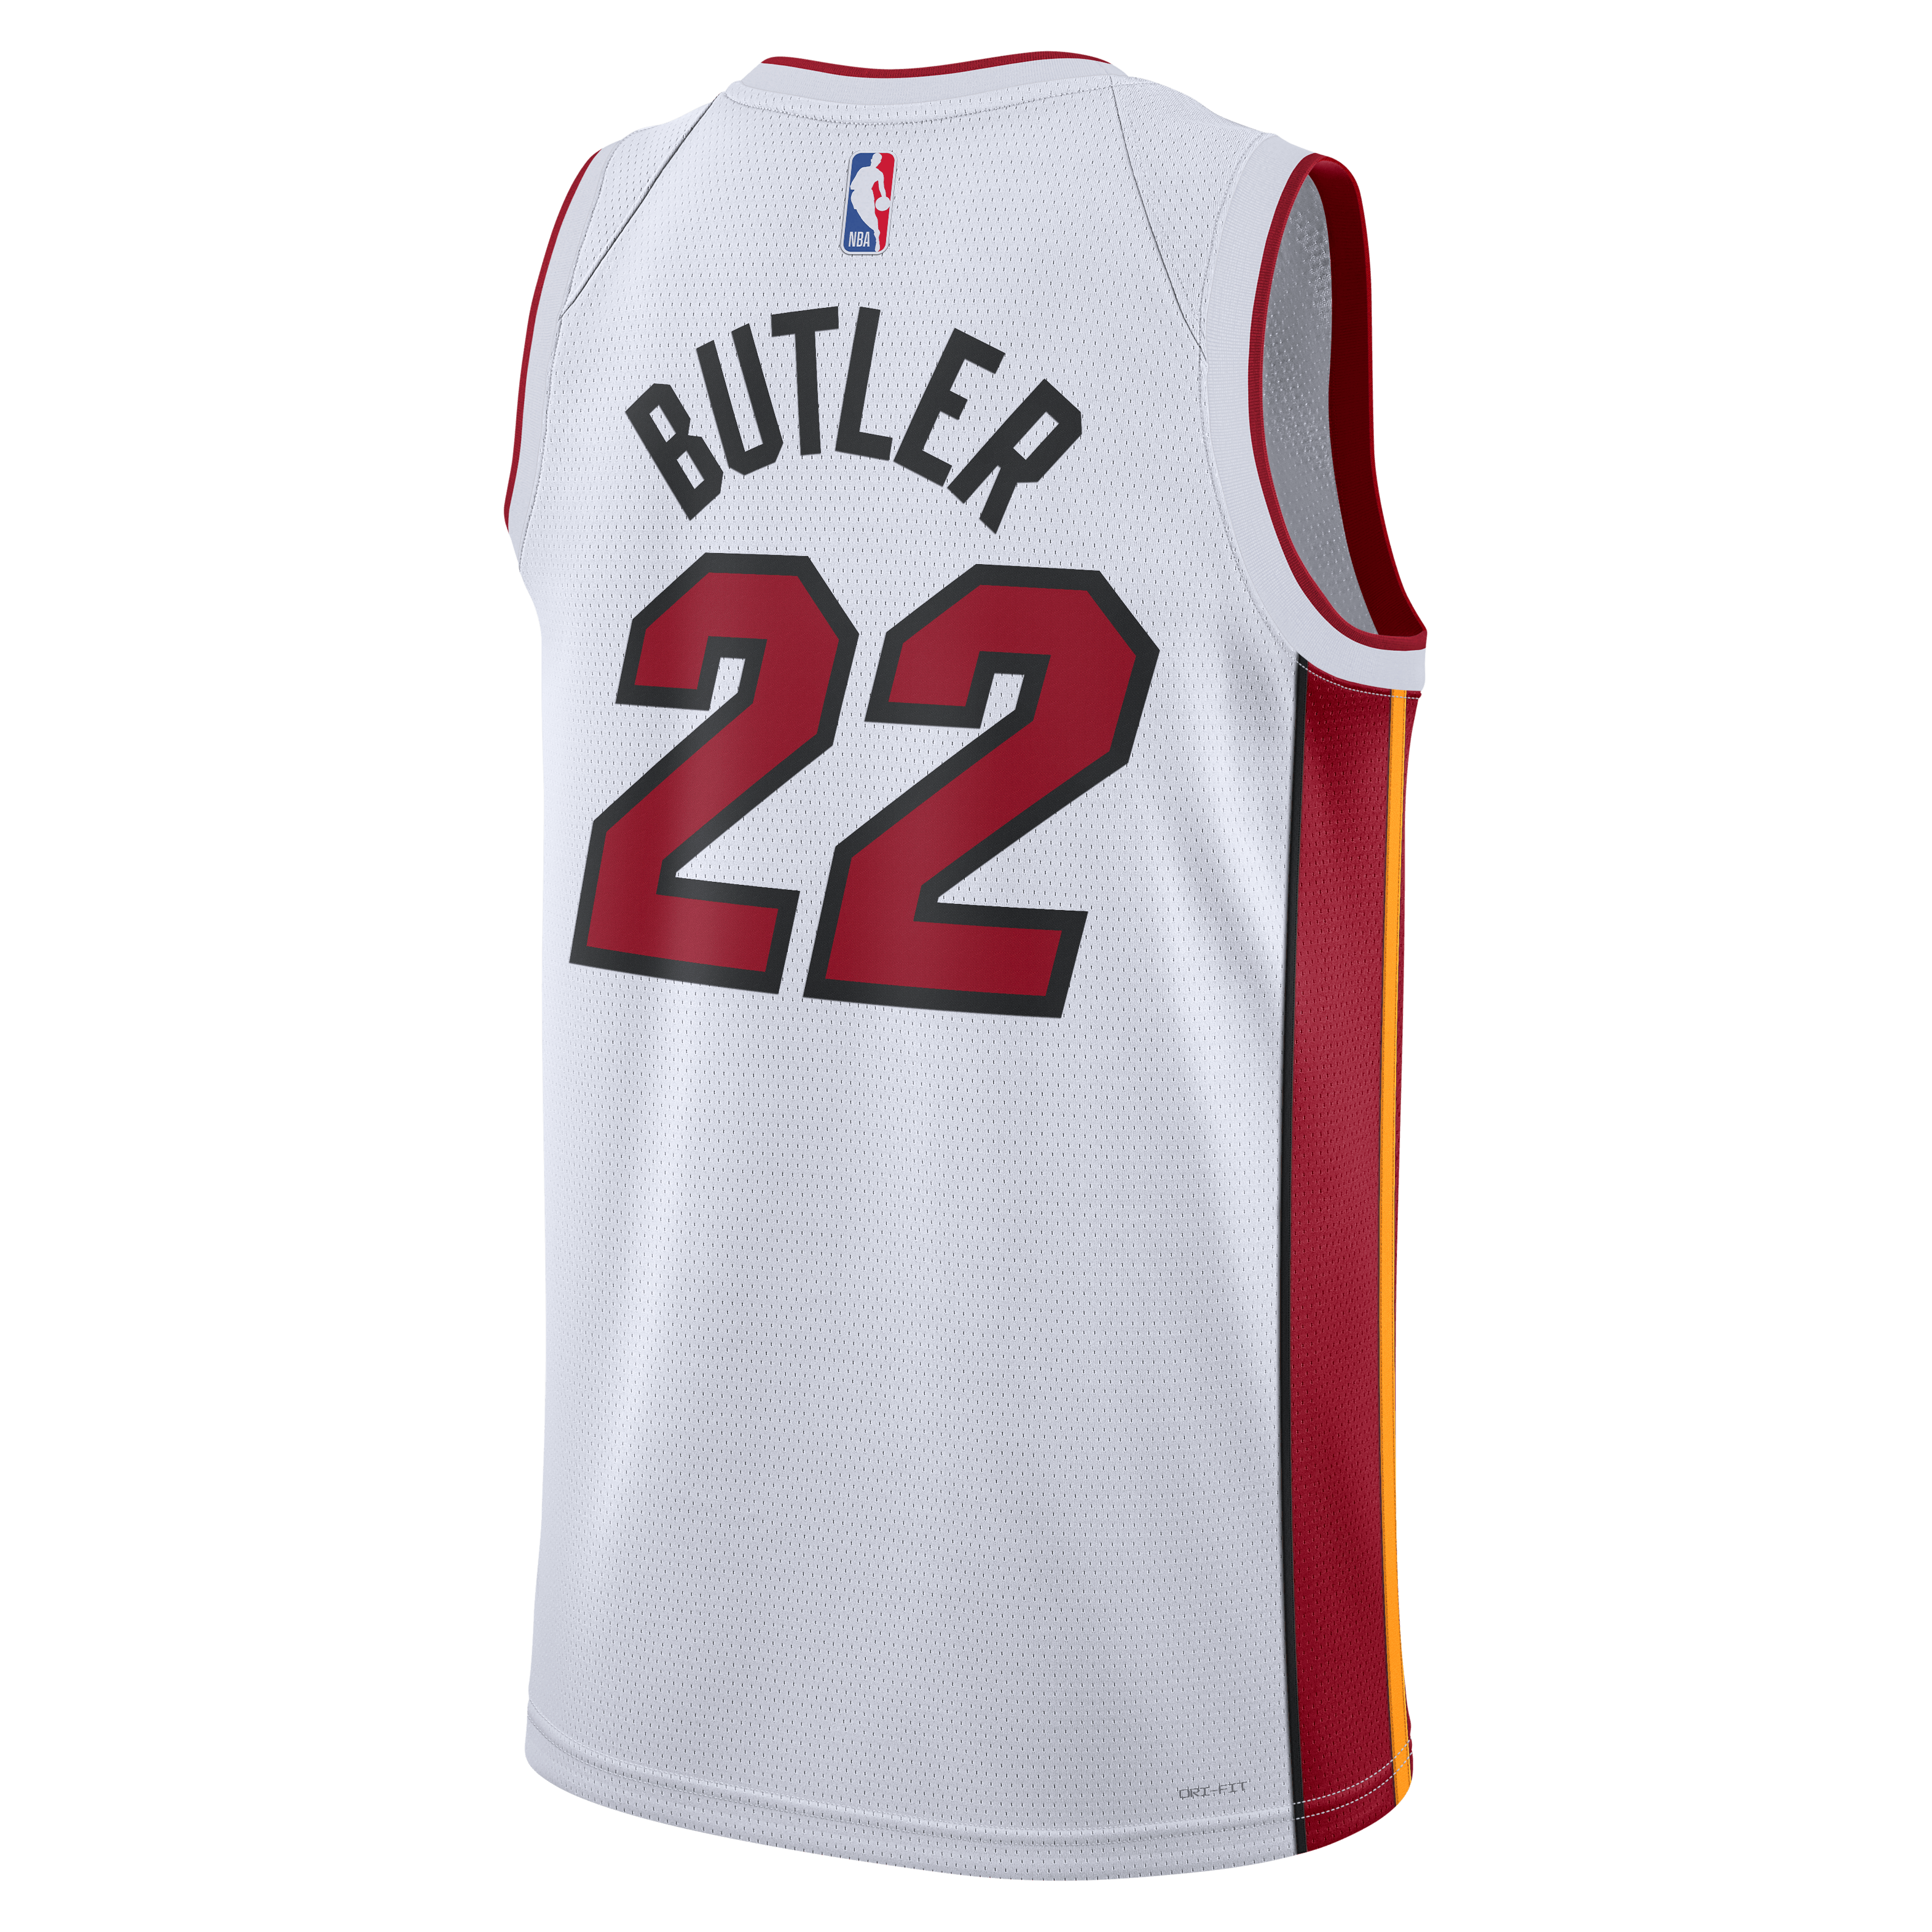 Jimmy Butler - Miami Heat - Game-Worn Association Edition Jersey